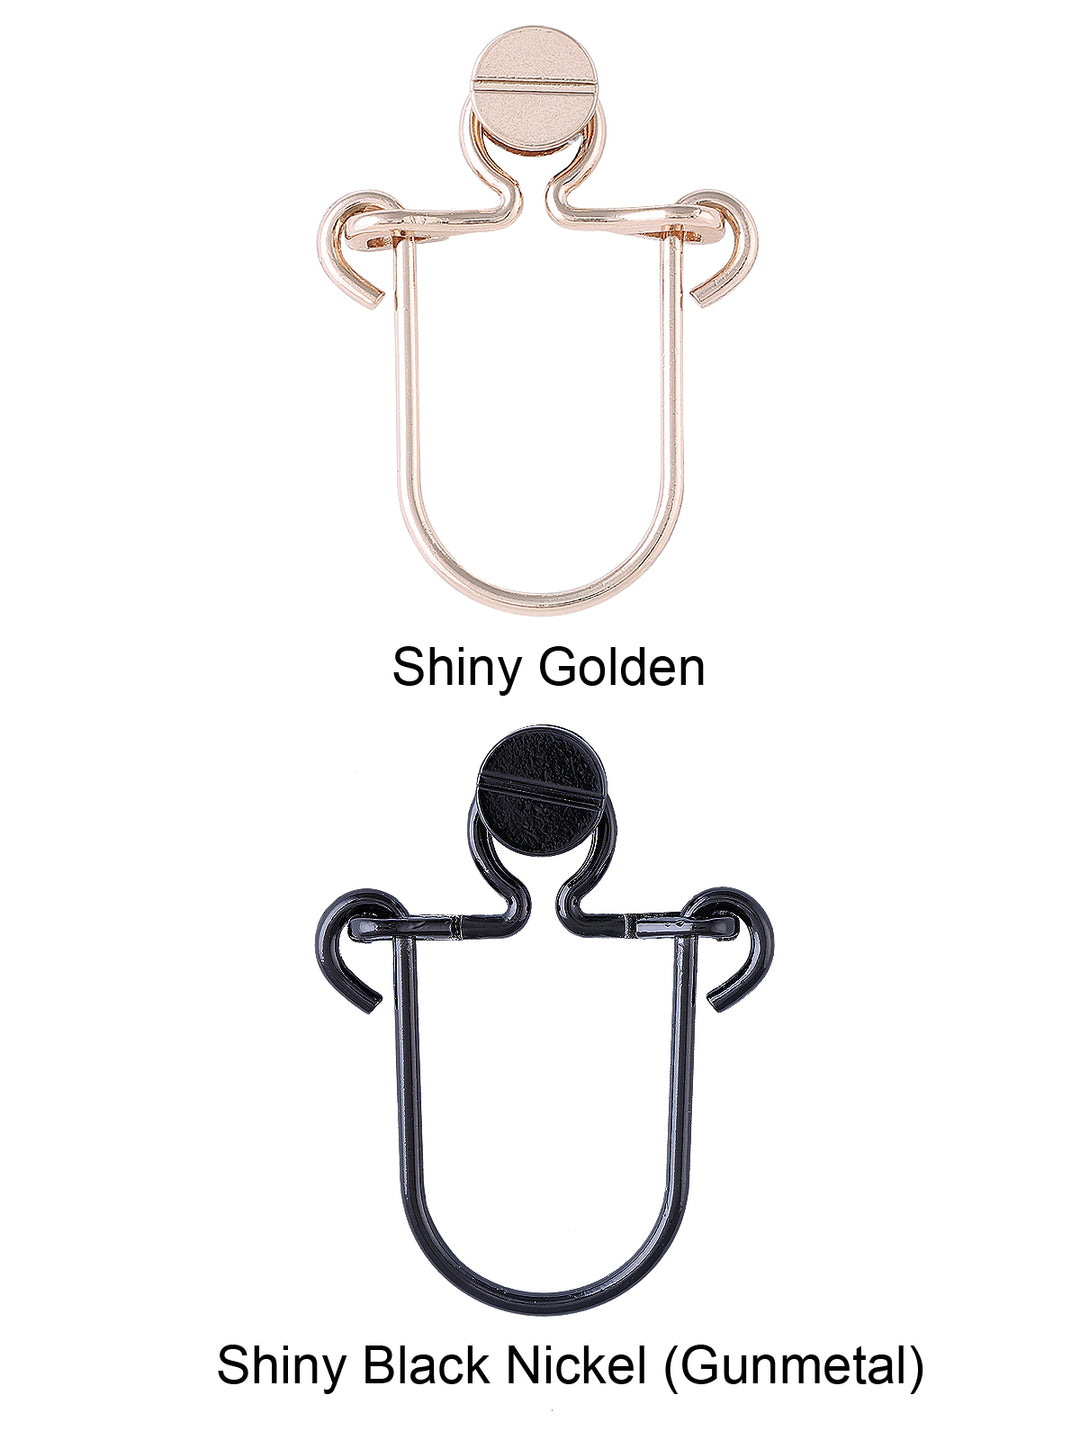 Very Fashionable & Unique Design in Shiny Golden & Shiny Black Nickel (Gunmetal) Colour Nut-Bolt Screw Fashion Accessory